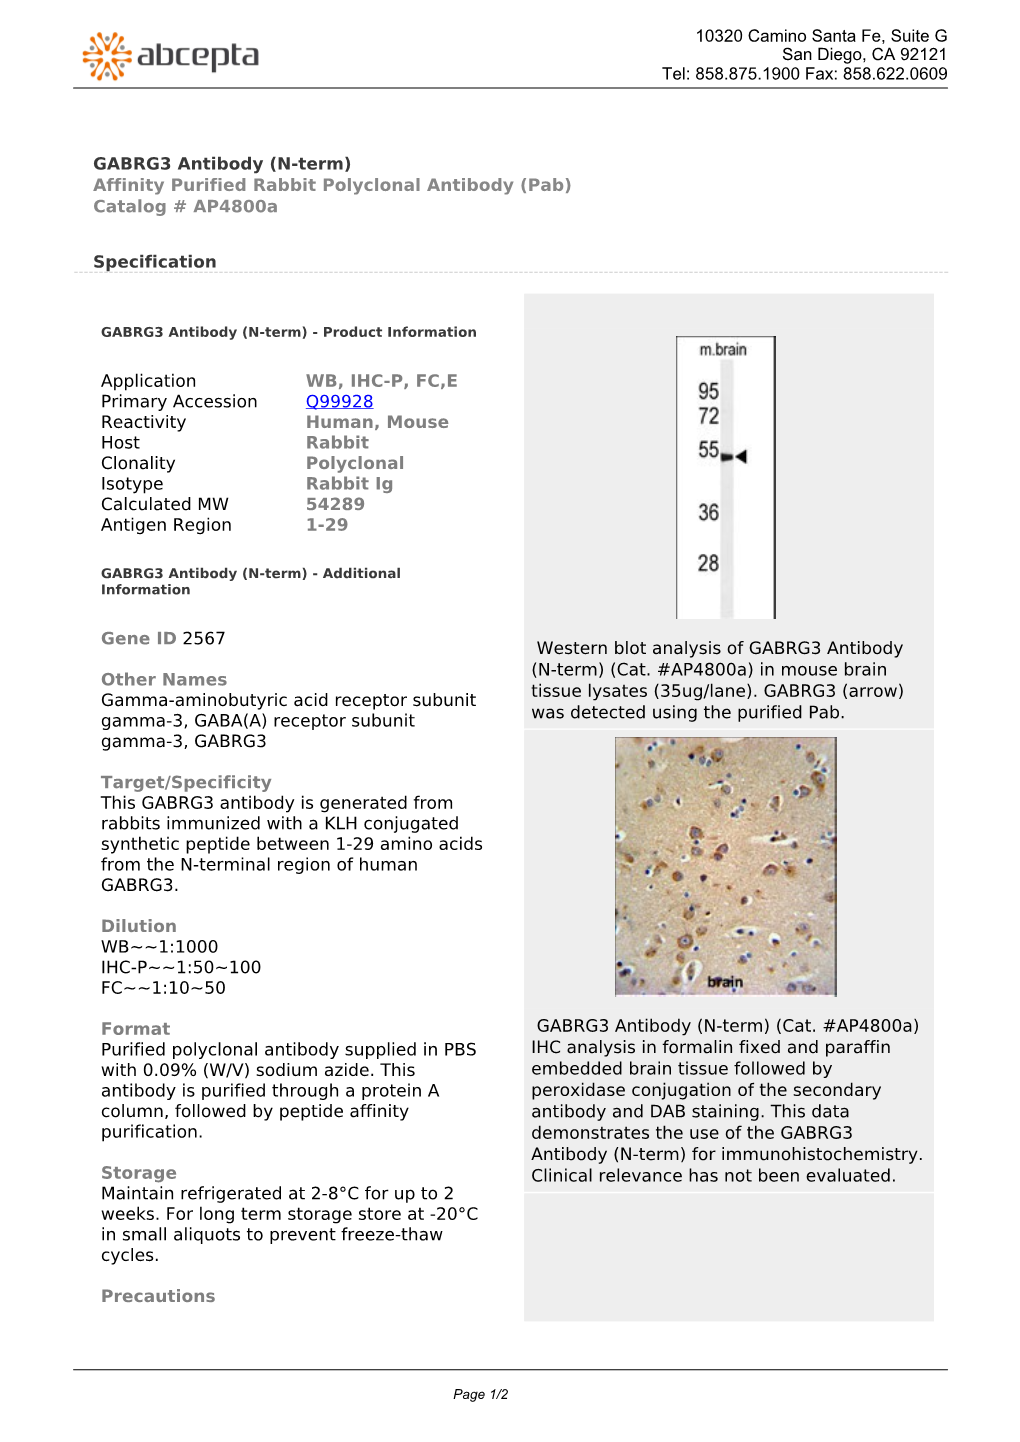 GABRG3 Antibody (N-Term) Affinity Purified Rabbit Polyclonal Antibody (Pab) Catalog # Ap4800a